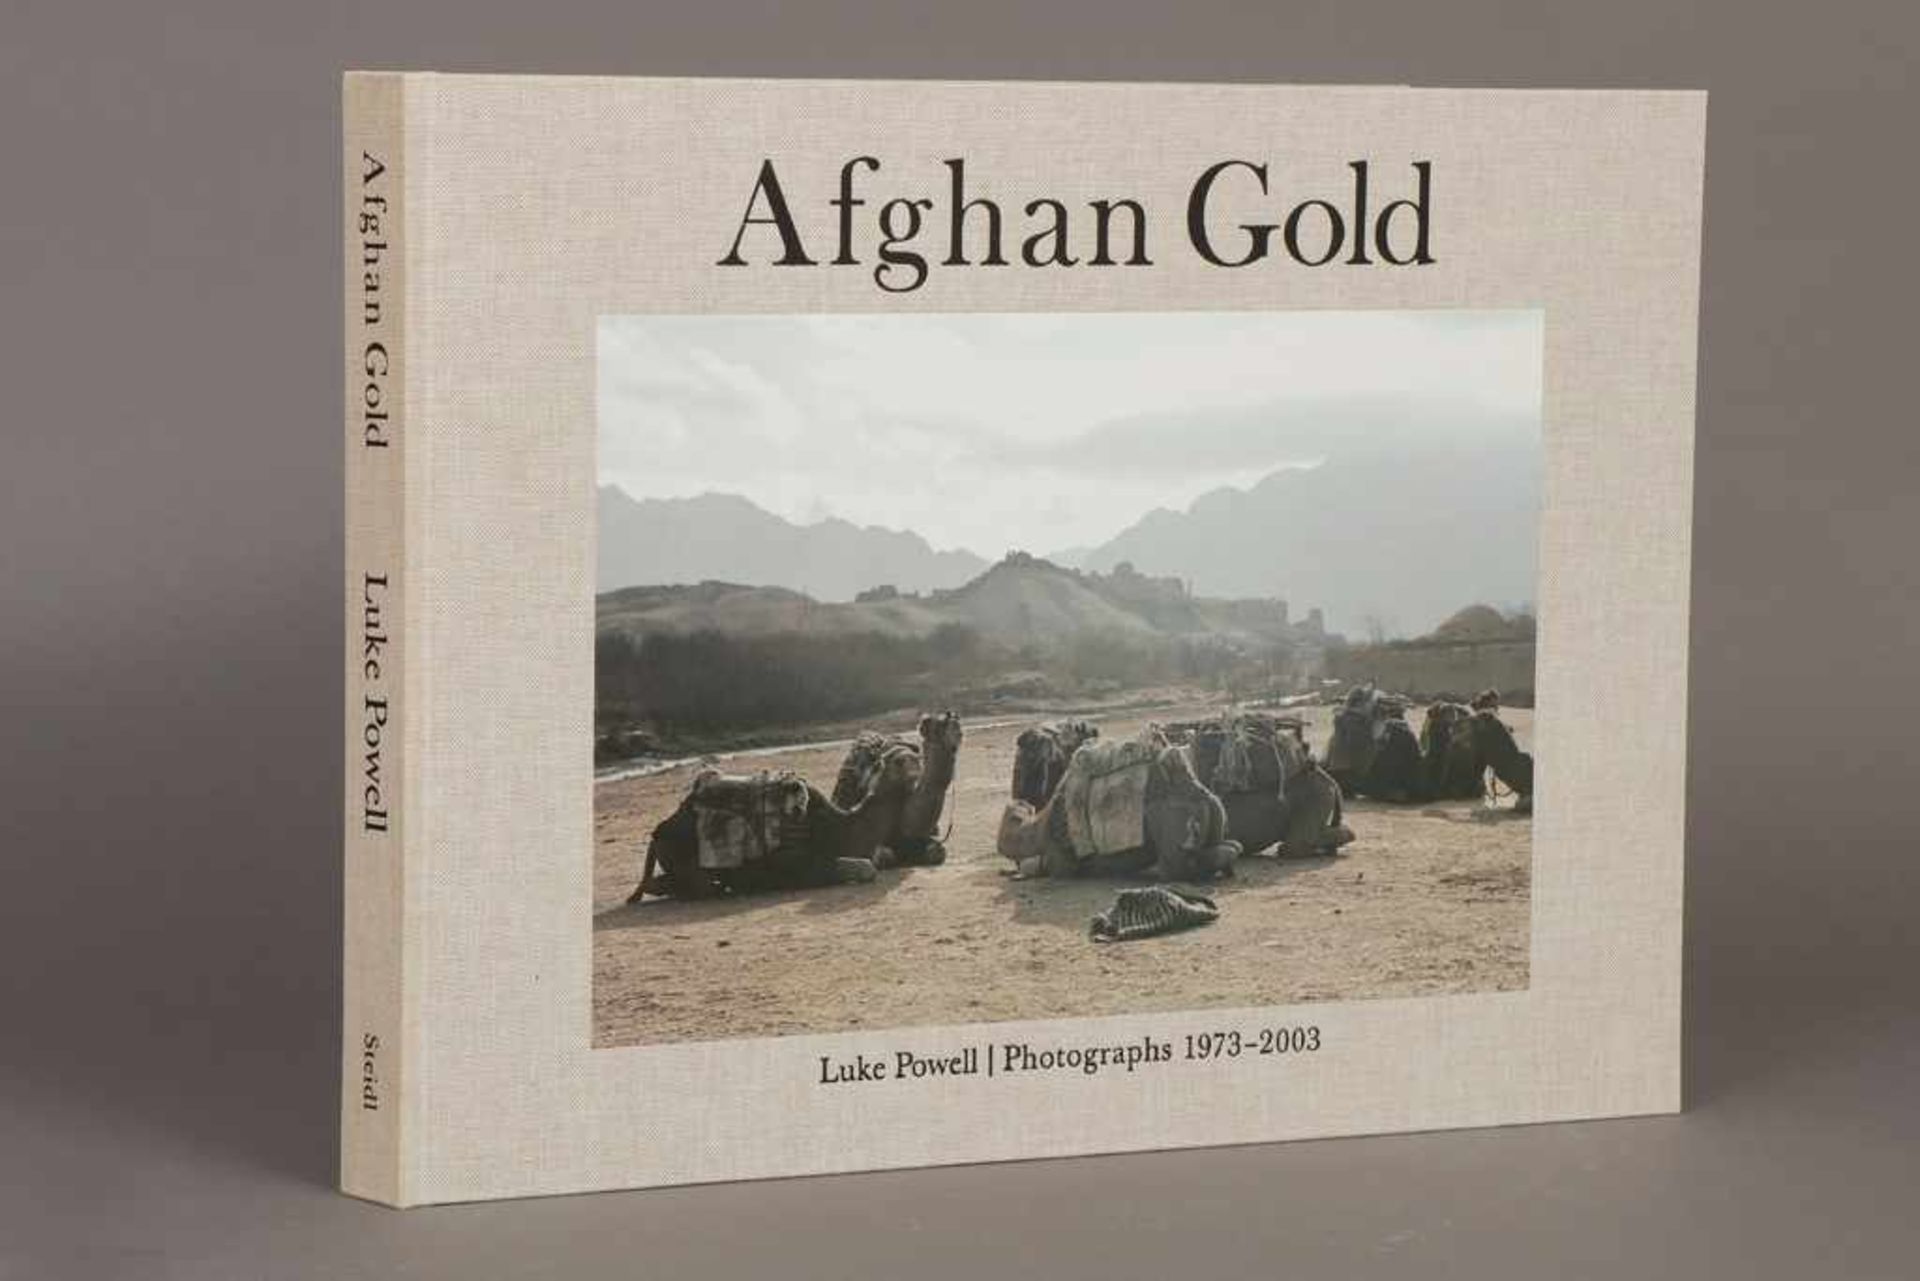 Buch ¨Afghan Gold¨ Luke Powell, Photographs 1973-2003, Verlag Steidl, Pappschuber, Leineneinband